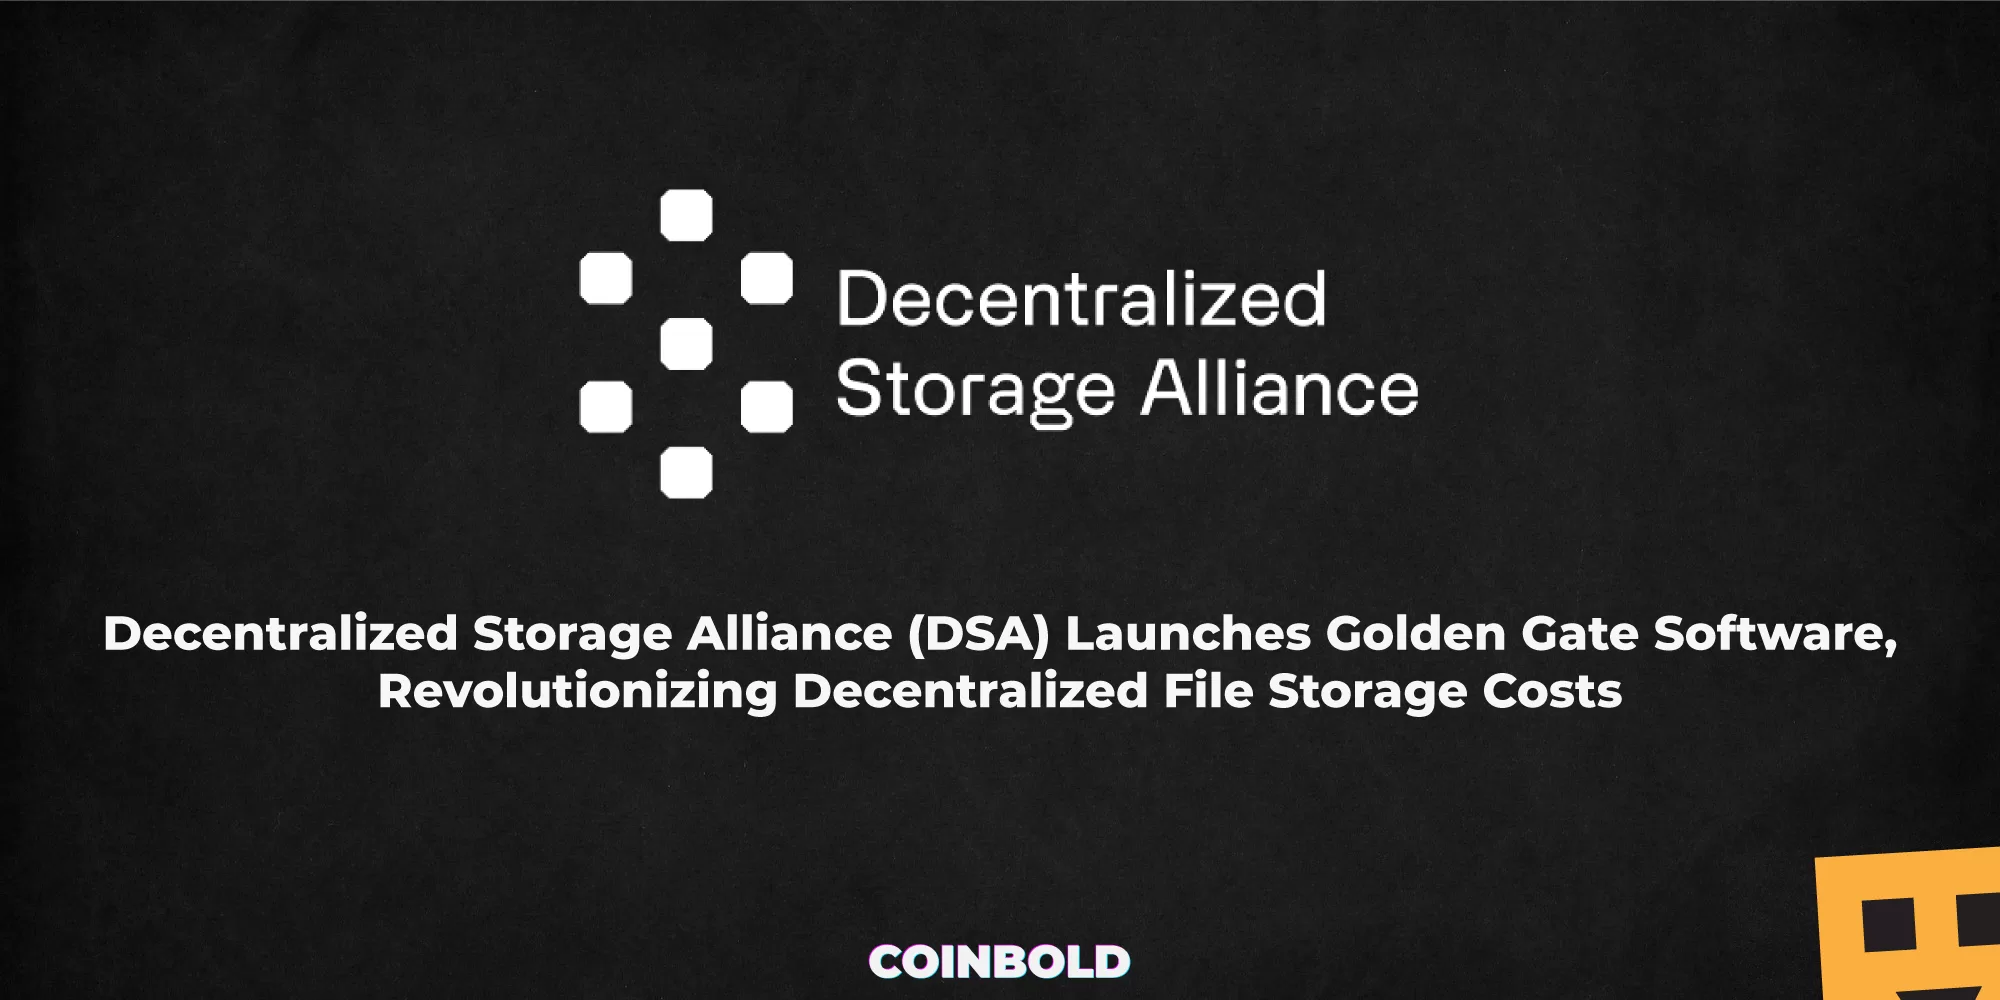 Decentralized Storage Alliance (DSA) Launches Golden Gate Software, Revolutionizing Decentralized File Storage Costs